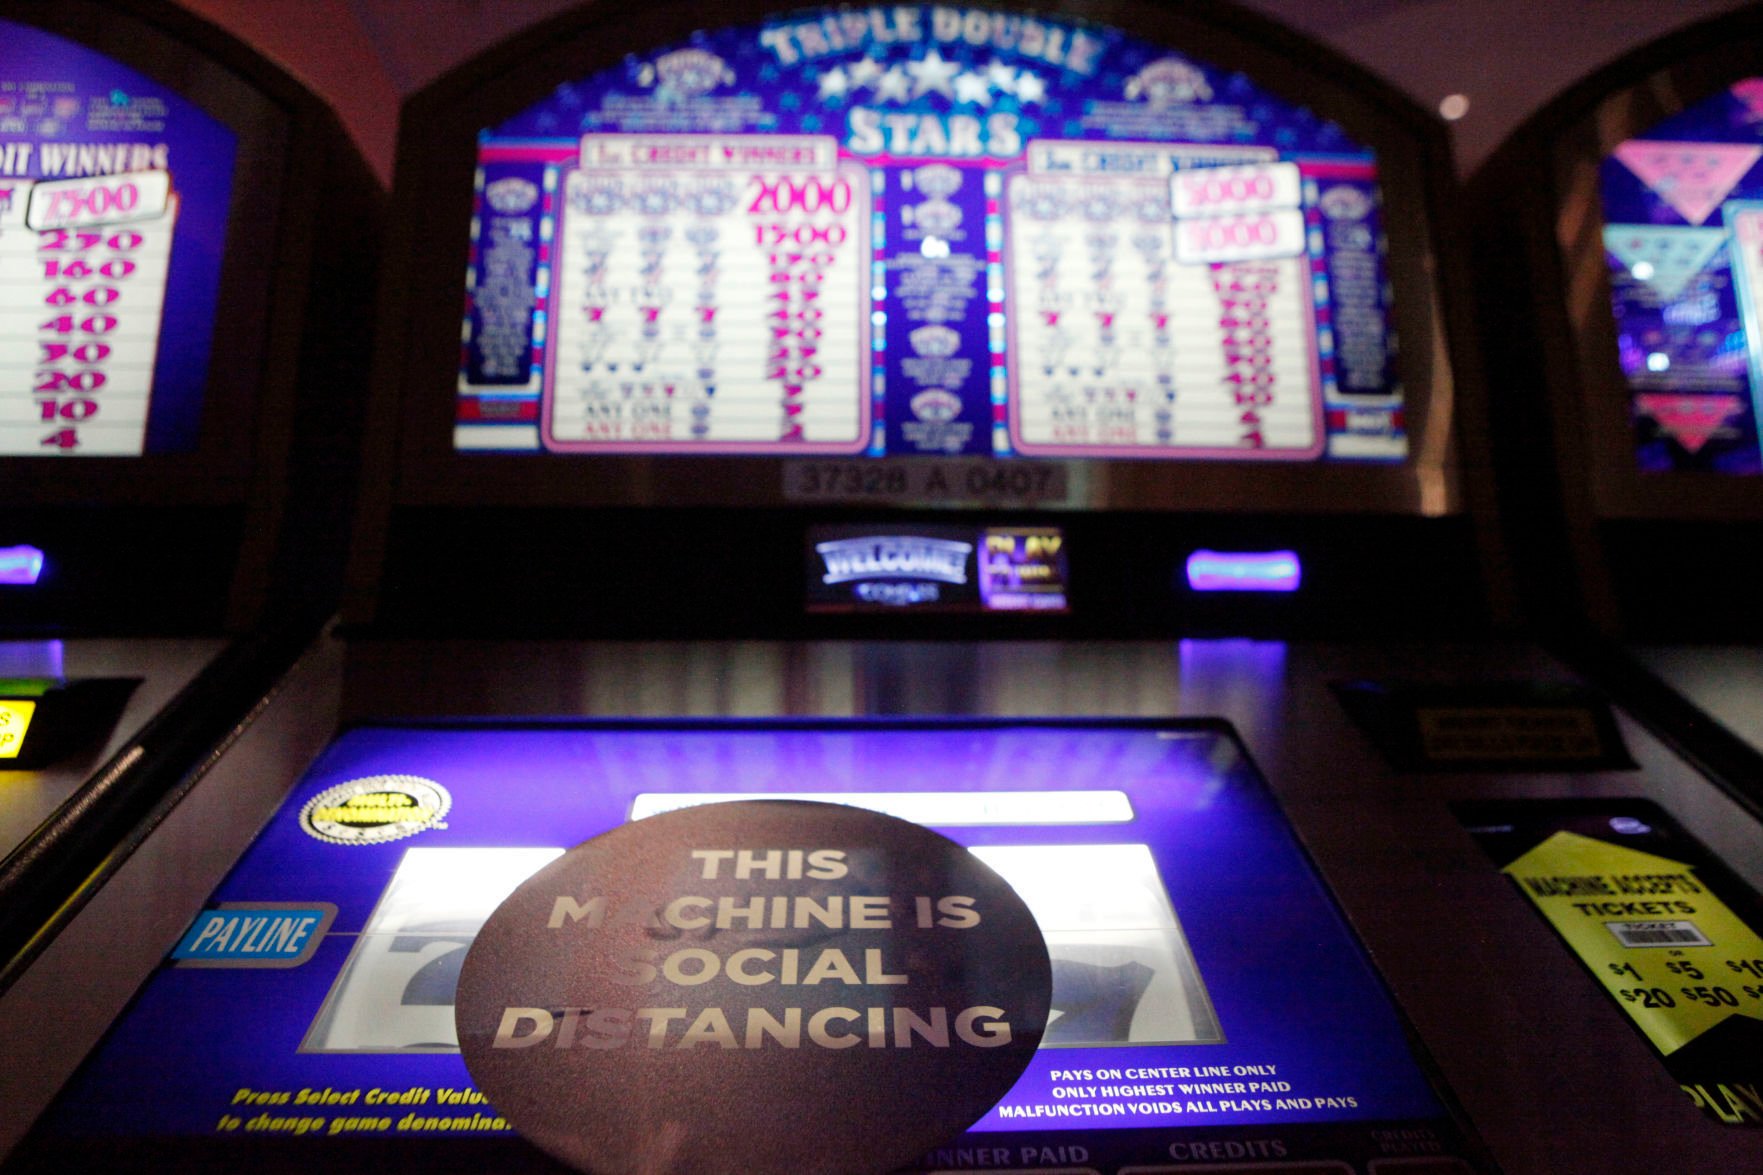 blue chip casino video poker payback 2019